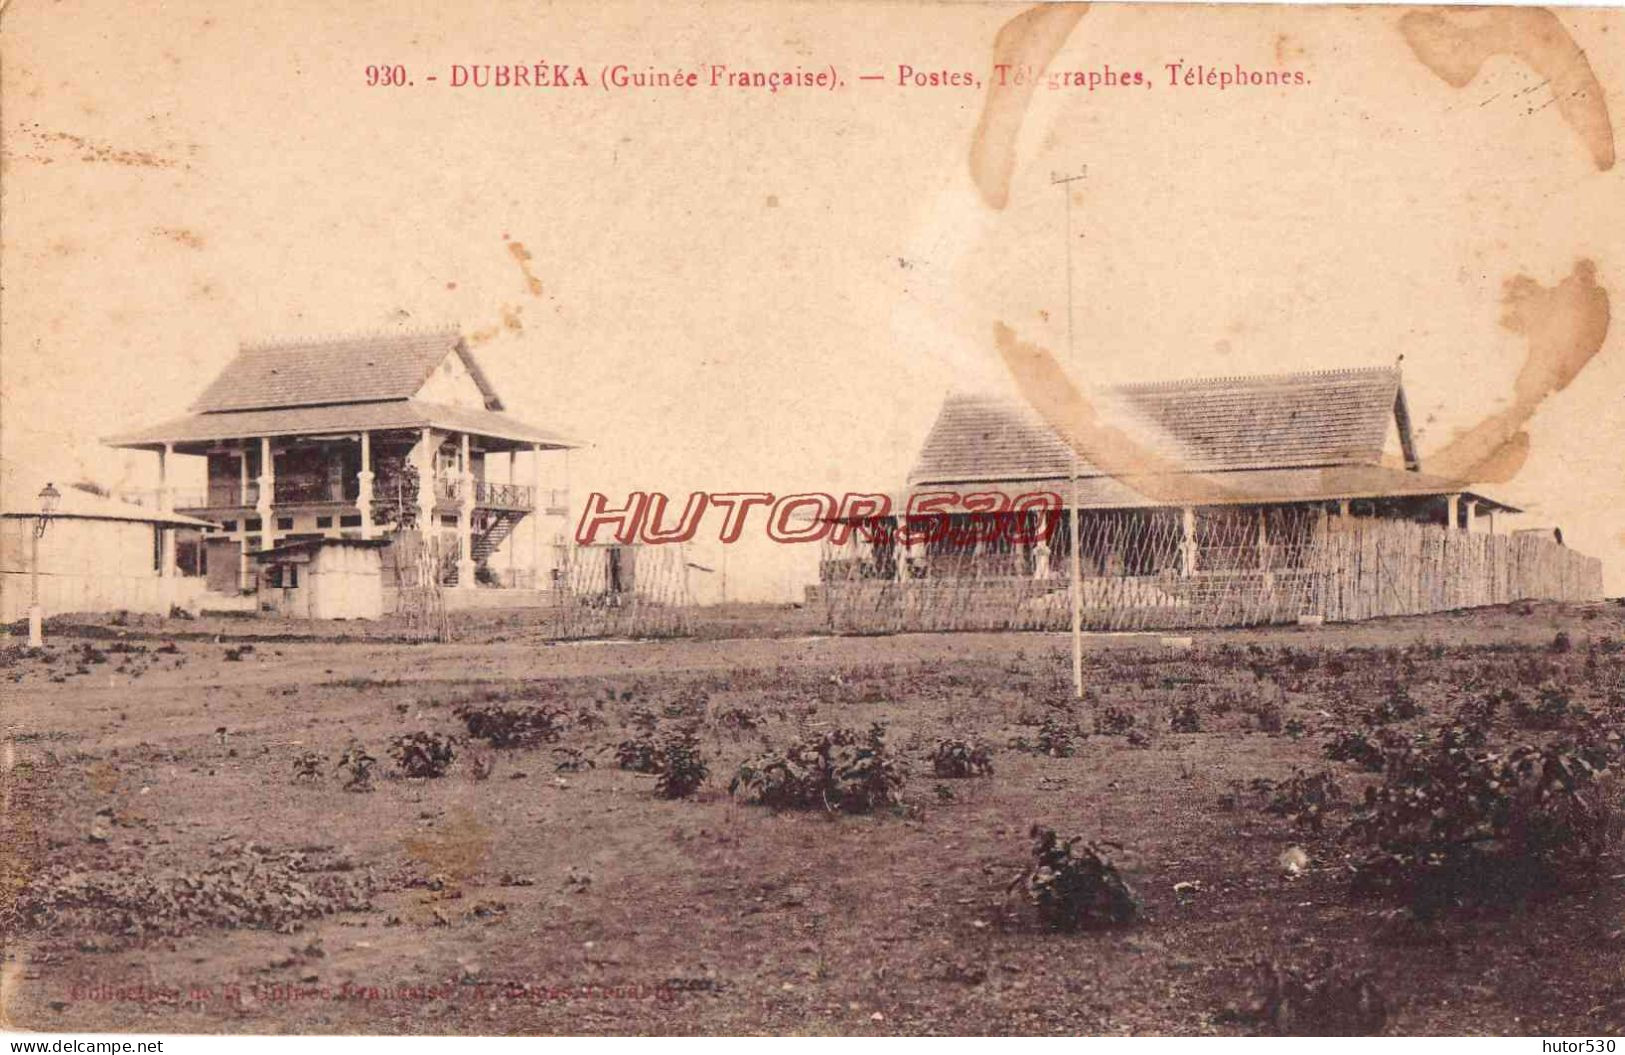 CPA DUBREKA - GUINEE FRANCAISE - POSTES TELEGRAPHES TELEPHONE - Französisch-Guinea